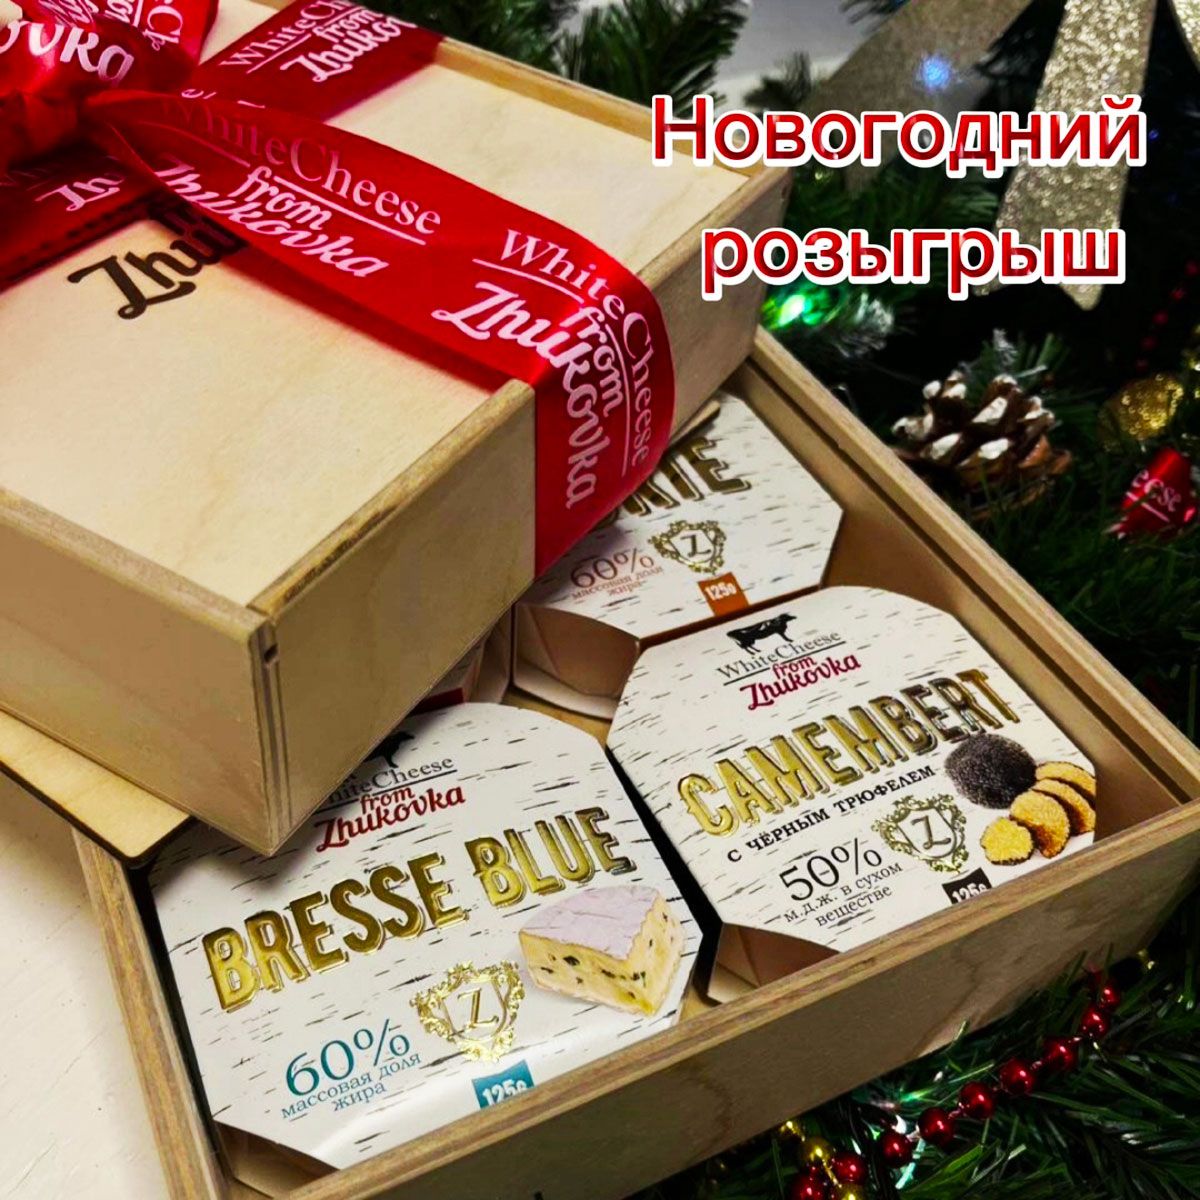 Примите участие в предновогоднем розыгрыше сыров White Cheese from Zhukovka!